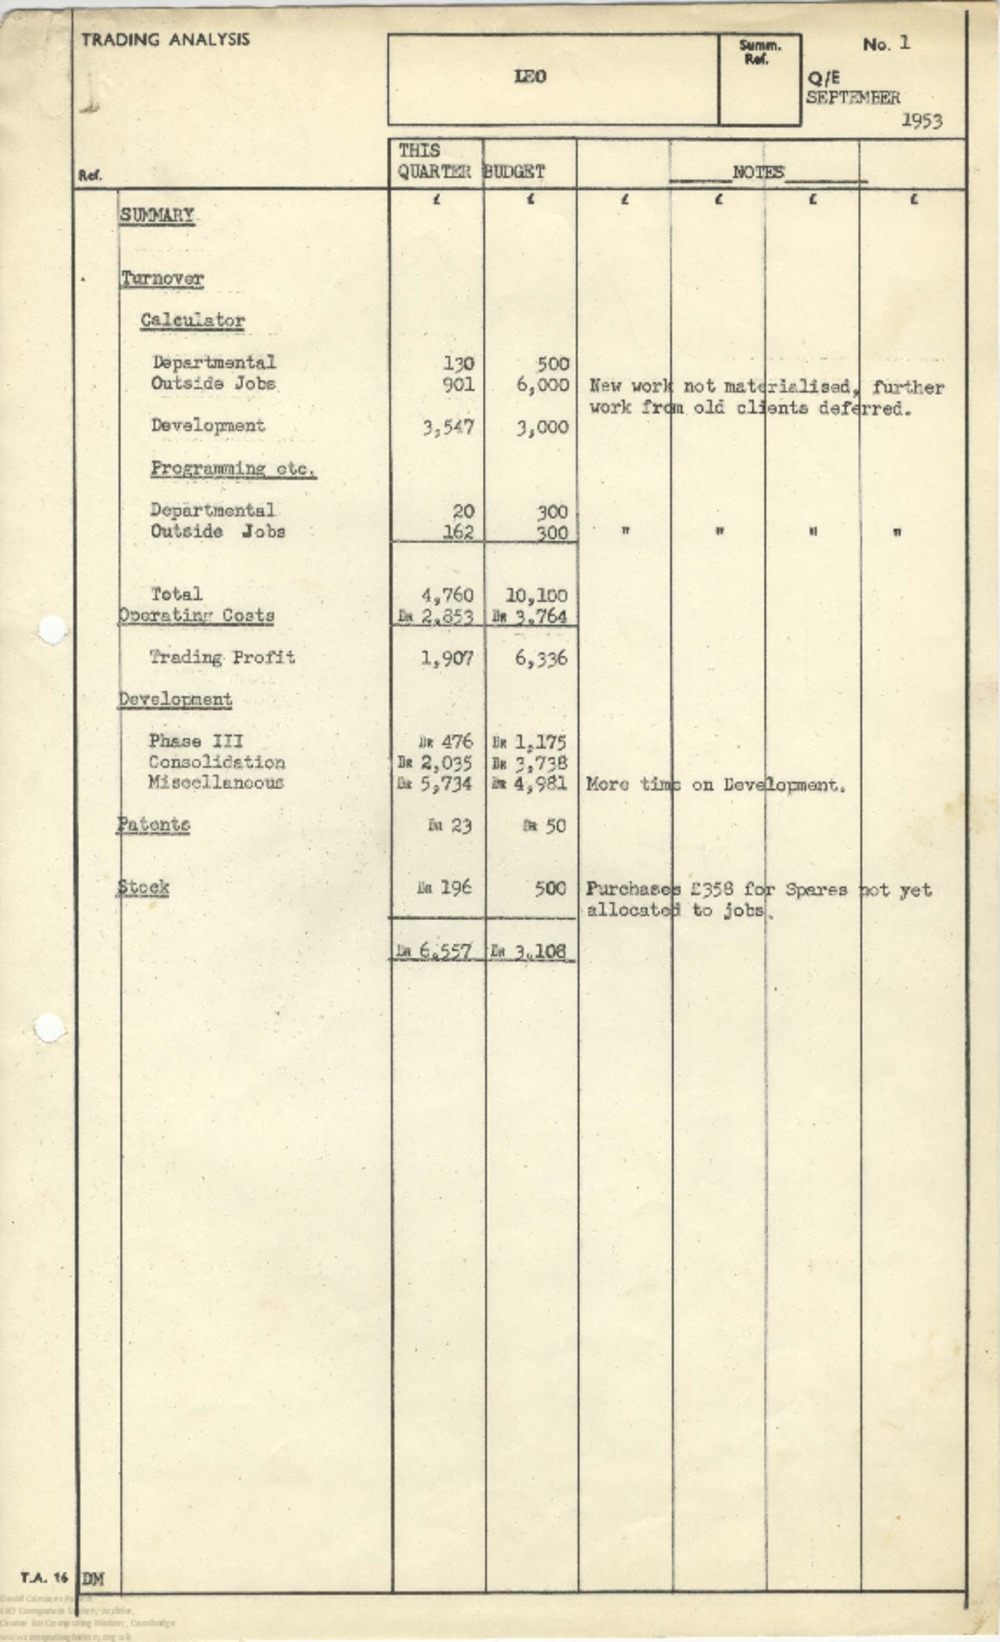 Article: 63022 September 1953 Quarter End - Trading Analysis